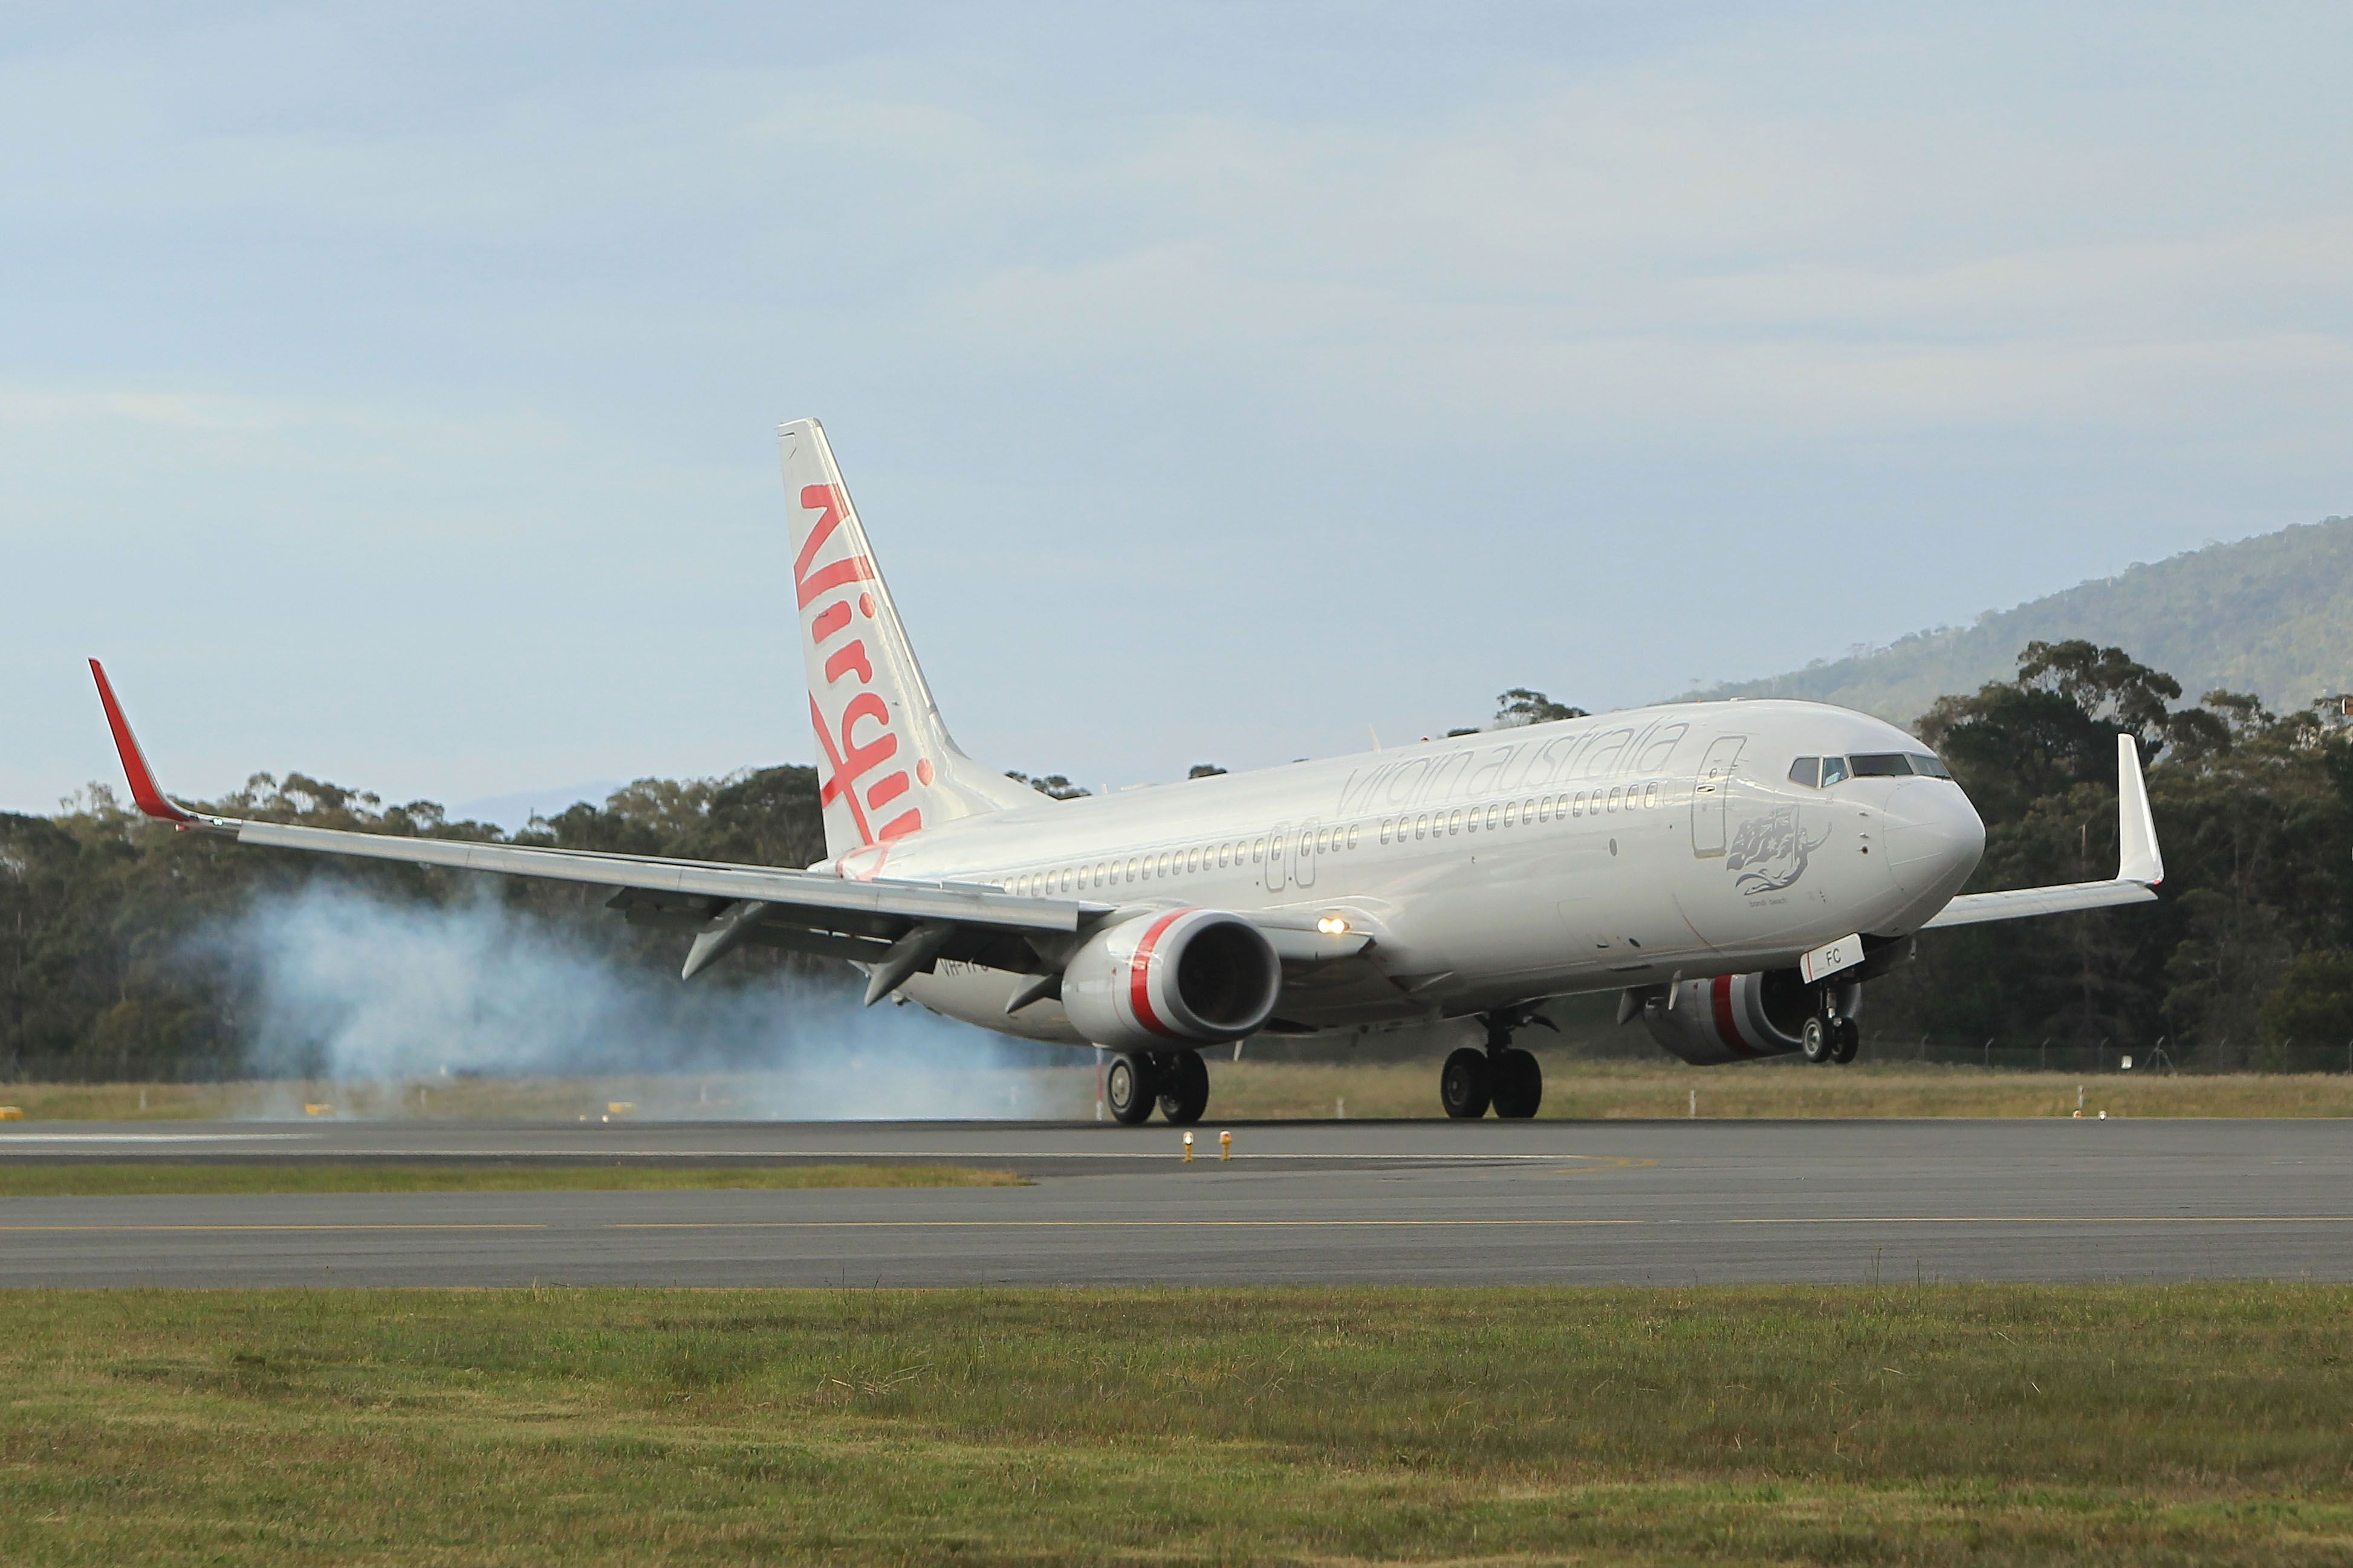 Virgin Australia Boeing 737-800 landing at Hobart